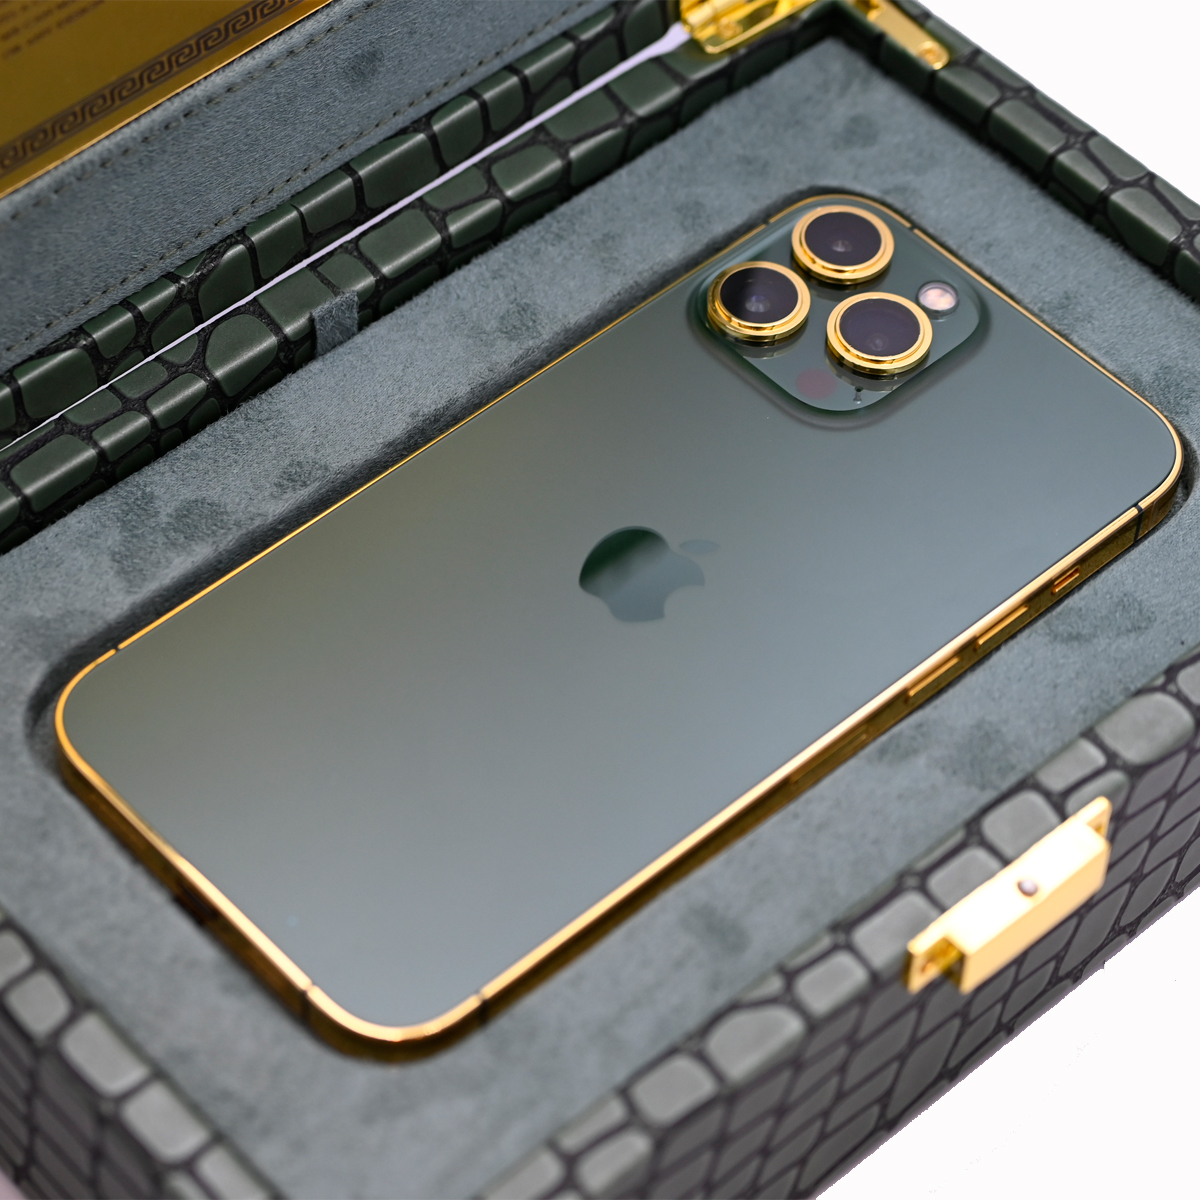 Caviar Luxury Customized 24k Gold Frame iPhone 13 Pro - Midnight Green 1TB